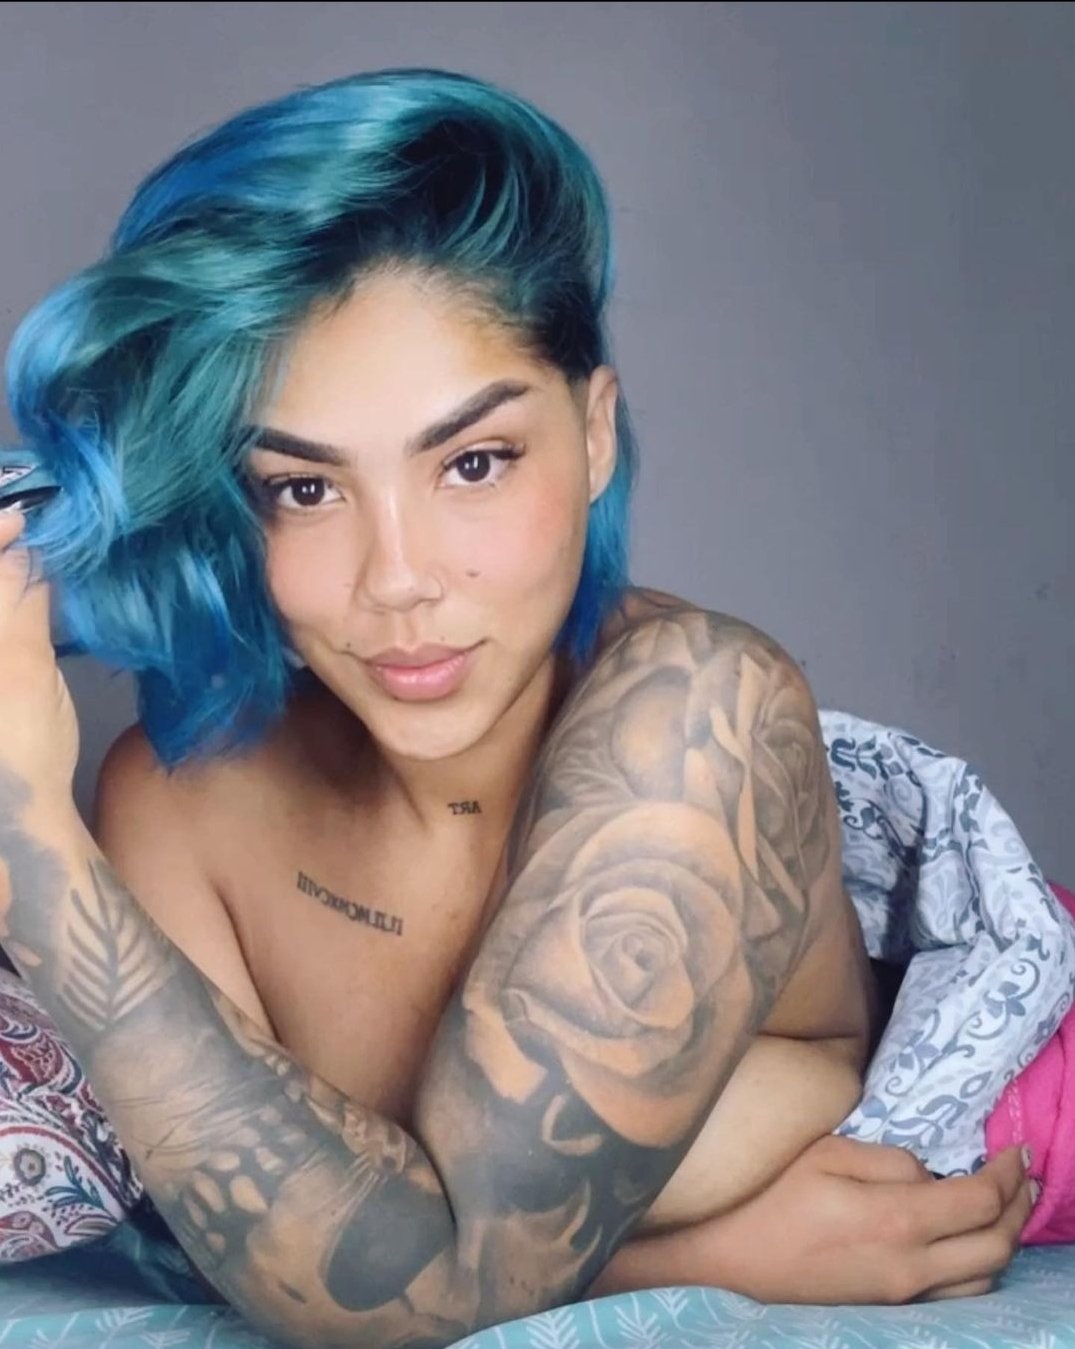 Monster Tits Tattoo - Huge tits tattooed latina - Porn Videos & Photos - EroMe